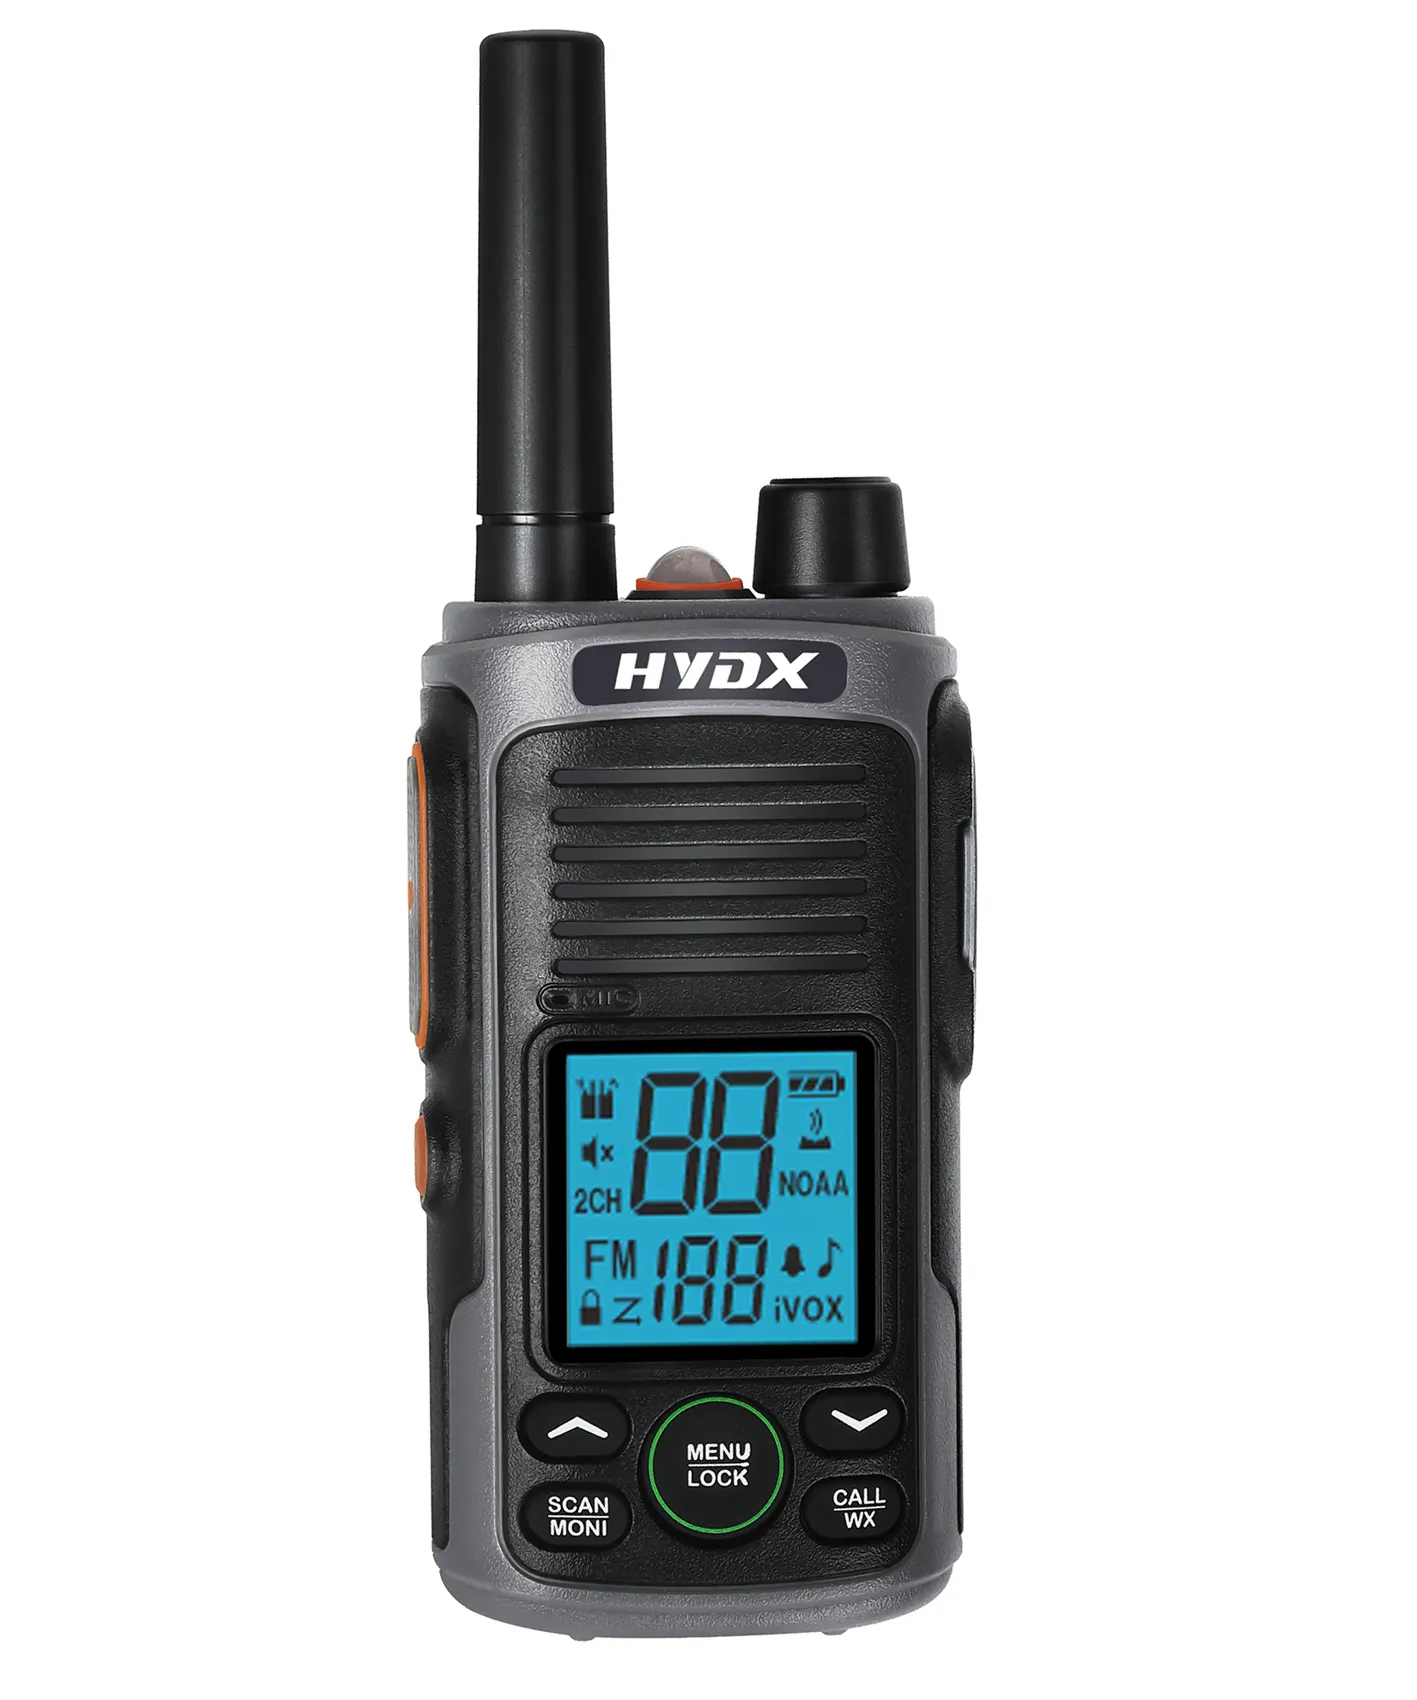 HYDX A210 UHF PMR446 NOAA 32 채널 FM 휴대용 충전식 1500mAh 양방향 라디오 미니 토키-무전기